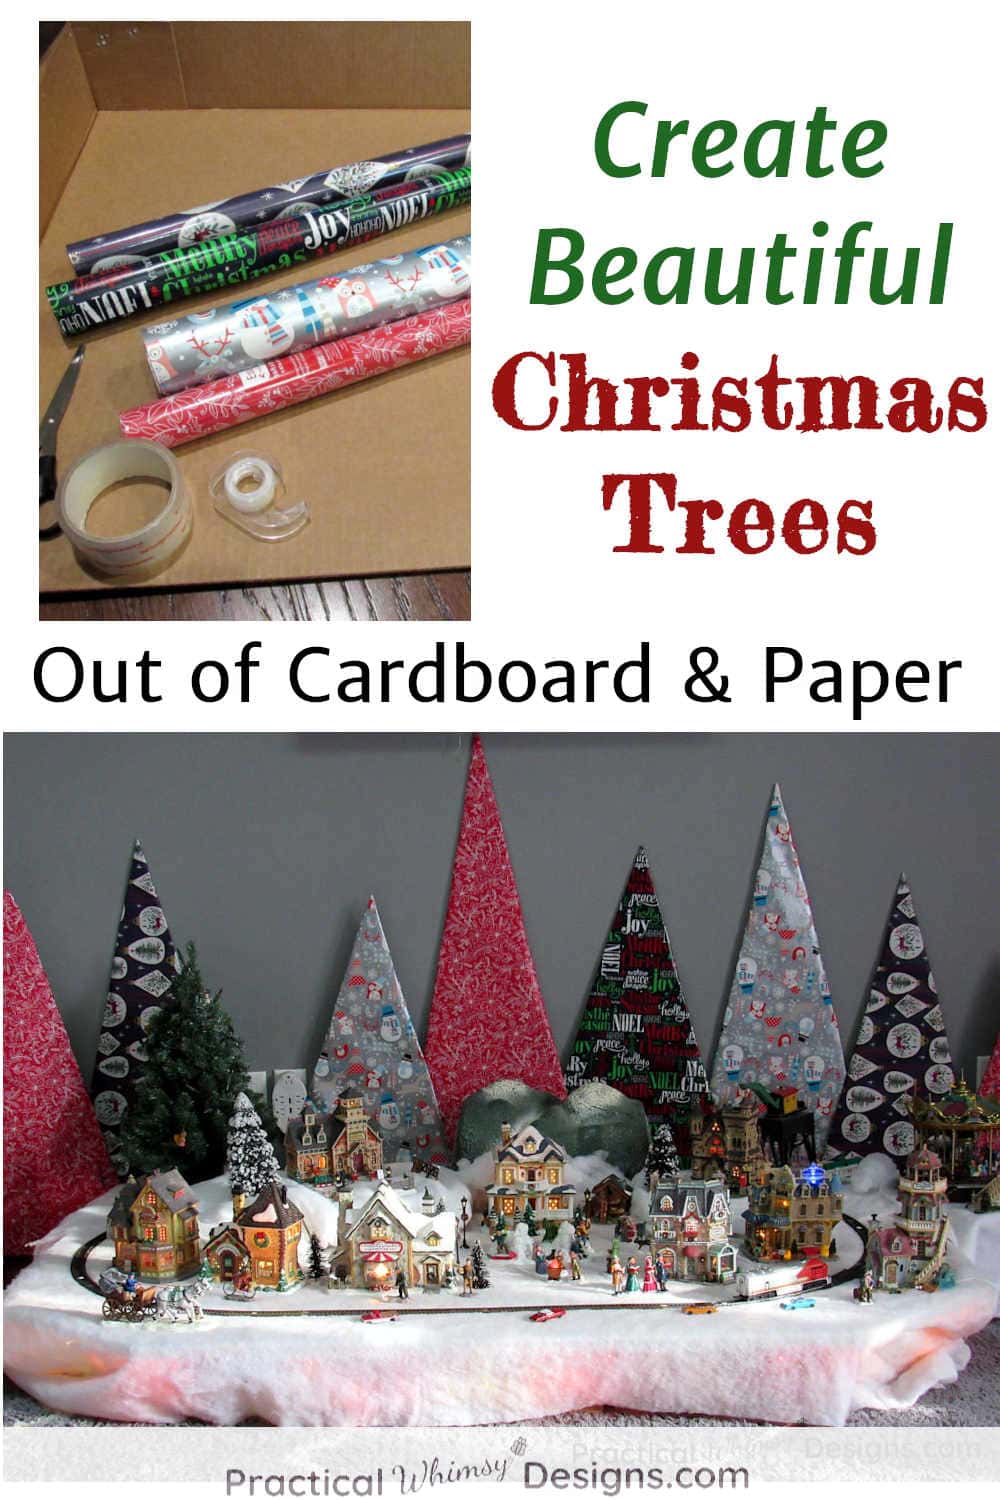 Cardboard Christmas Trees behind Christmas village